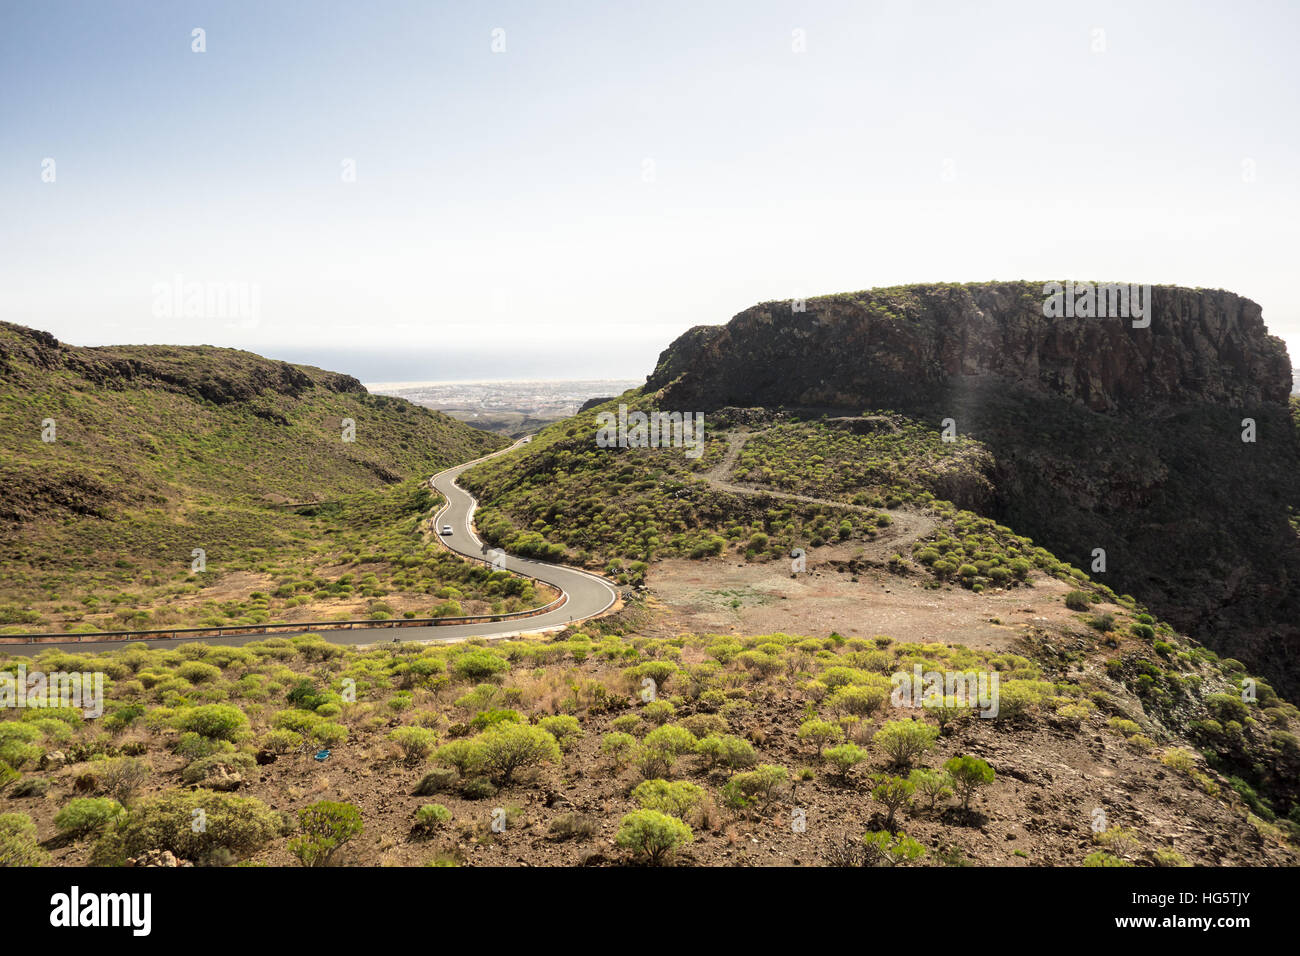 View from Macizo de Amurga which overlooks the Barranco de Fataga, one of the volcanic mountains in Gran Canaria. Stock Photo